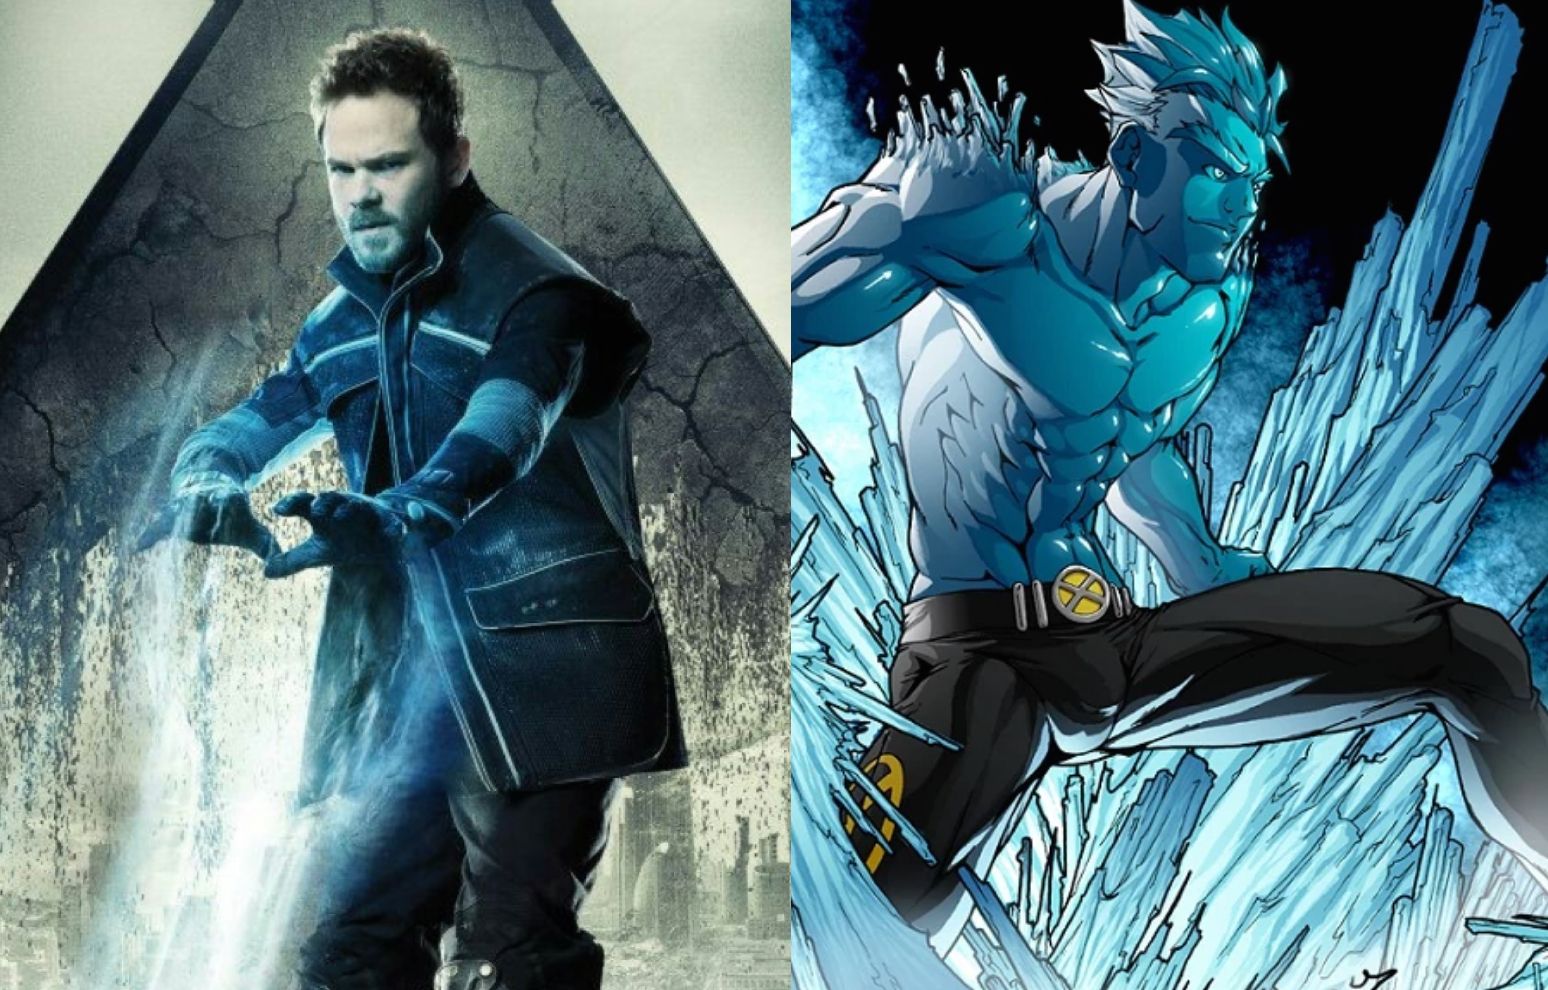 Bobby Drake Iceman in X-Men Movies and Comics